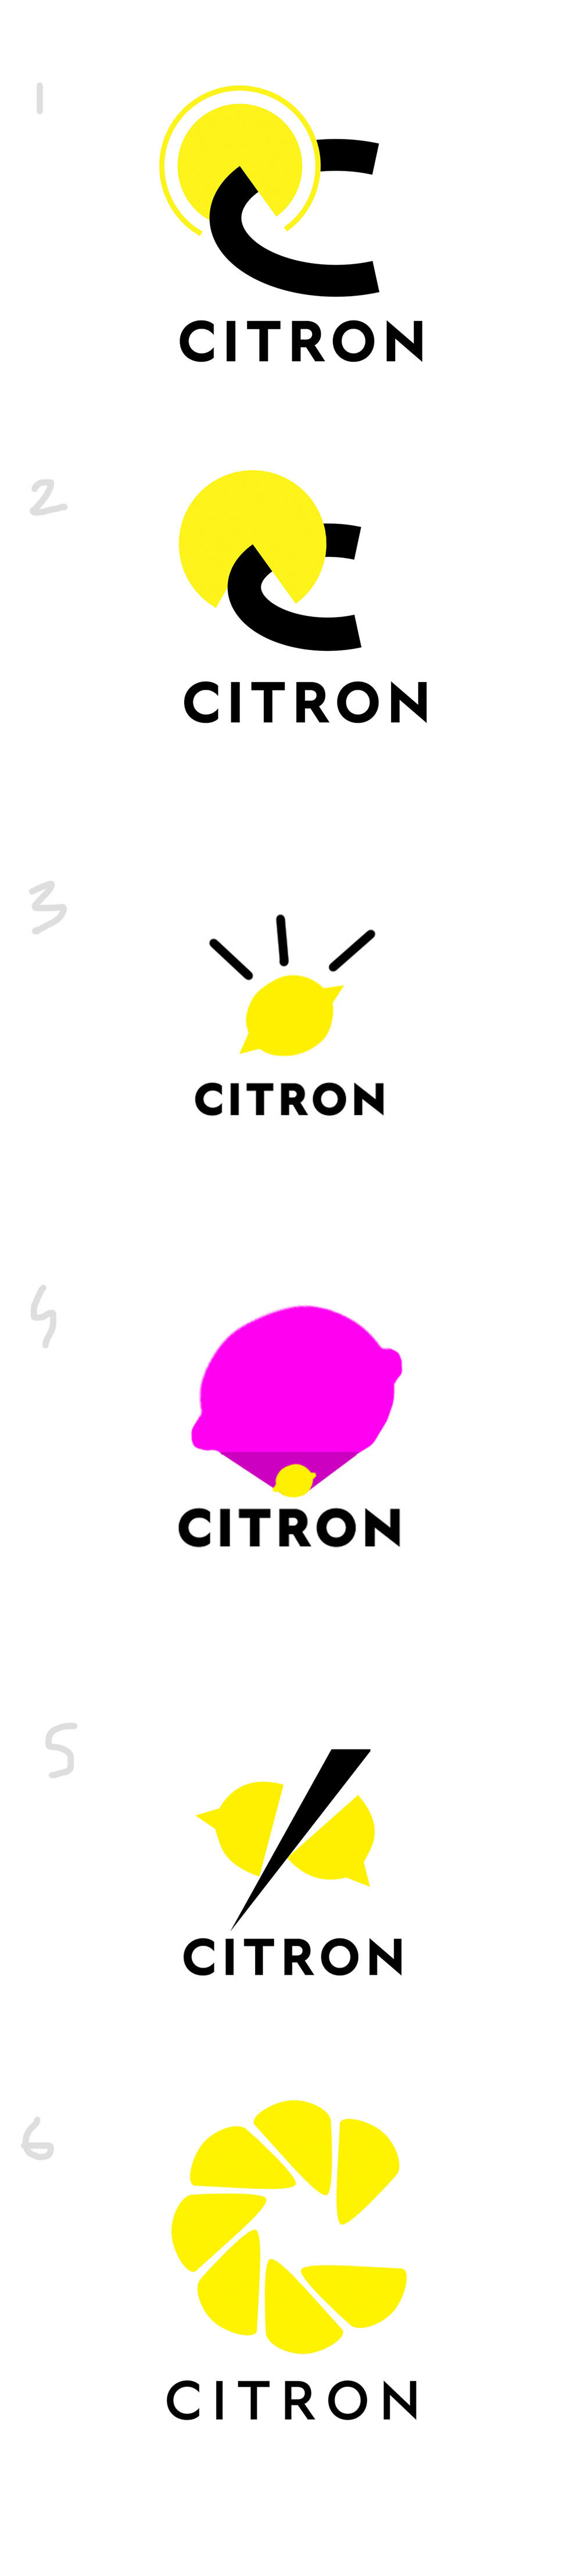 citron process 01